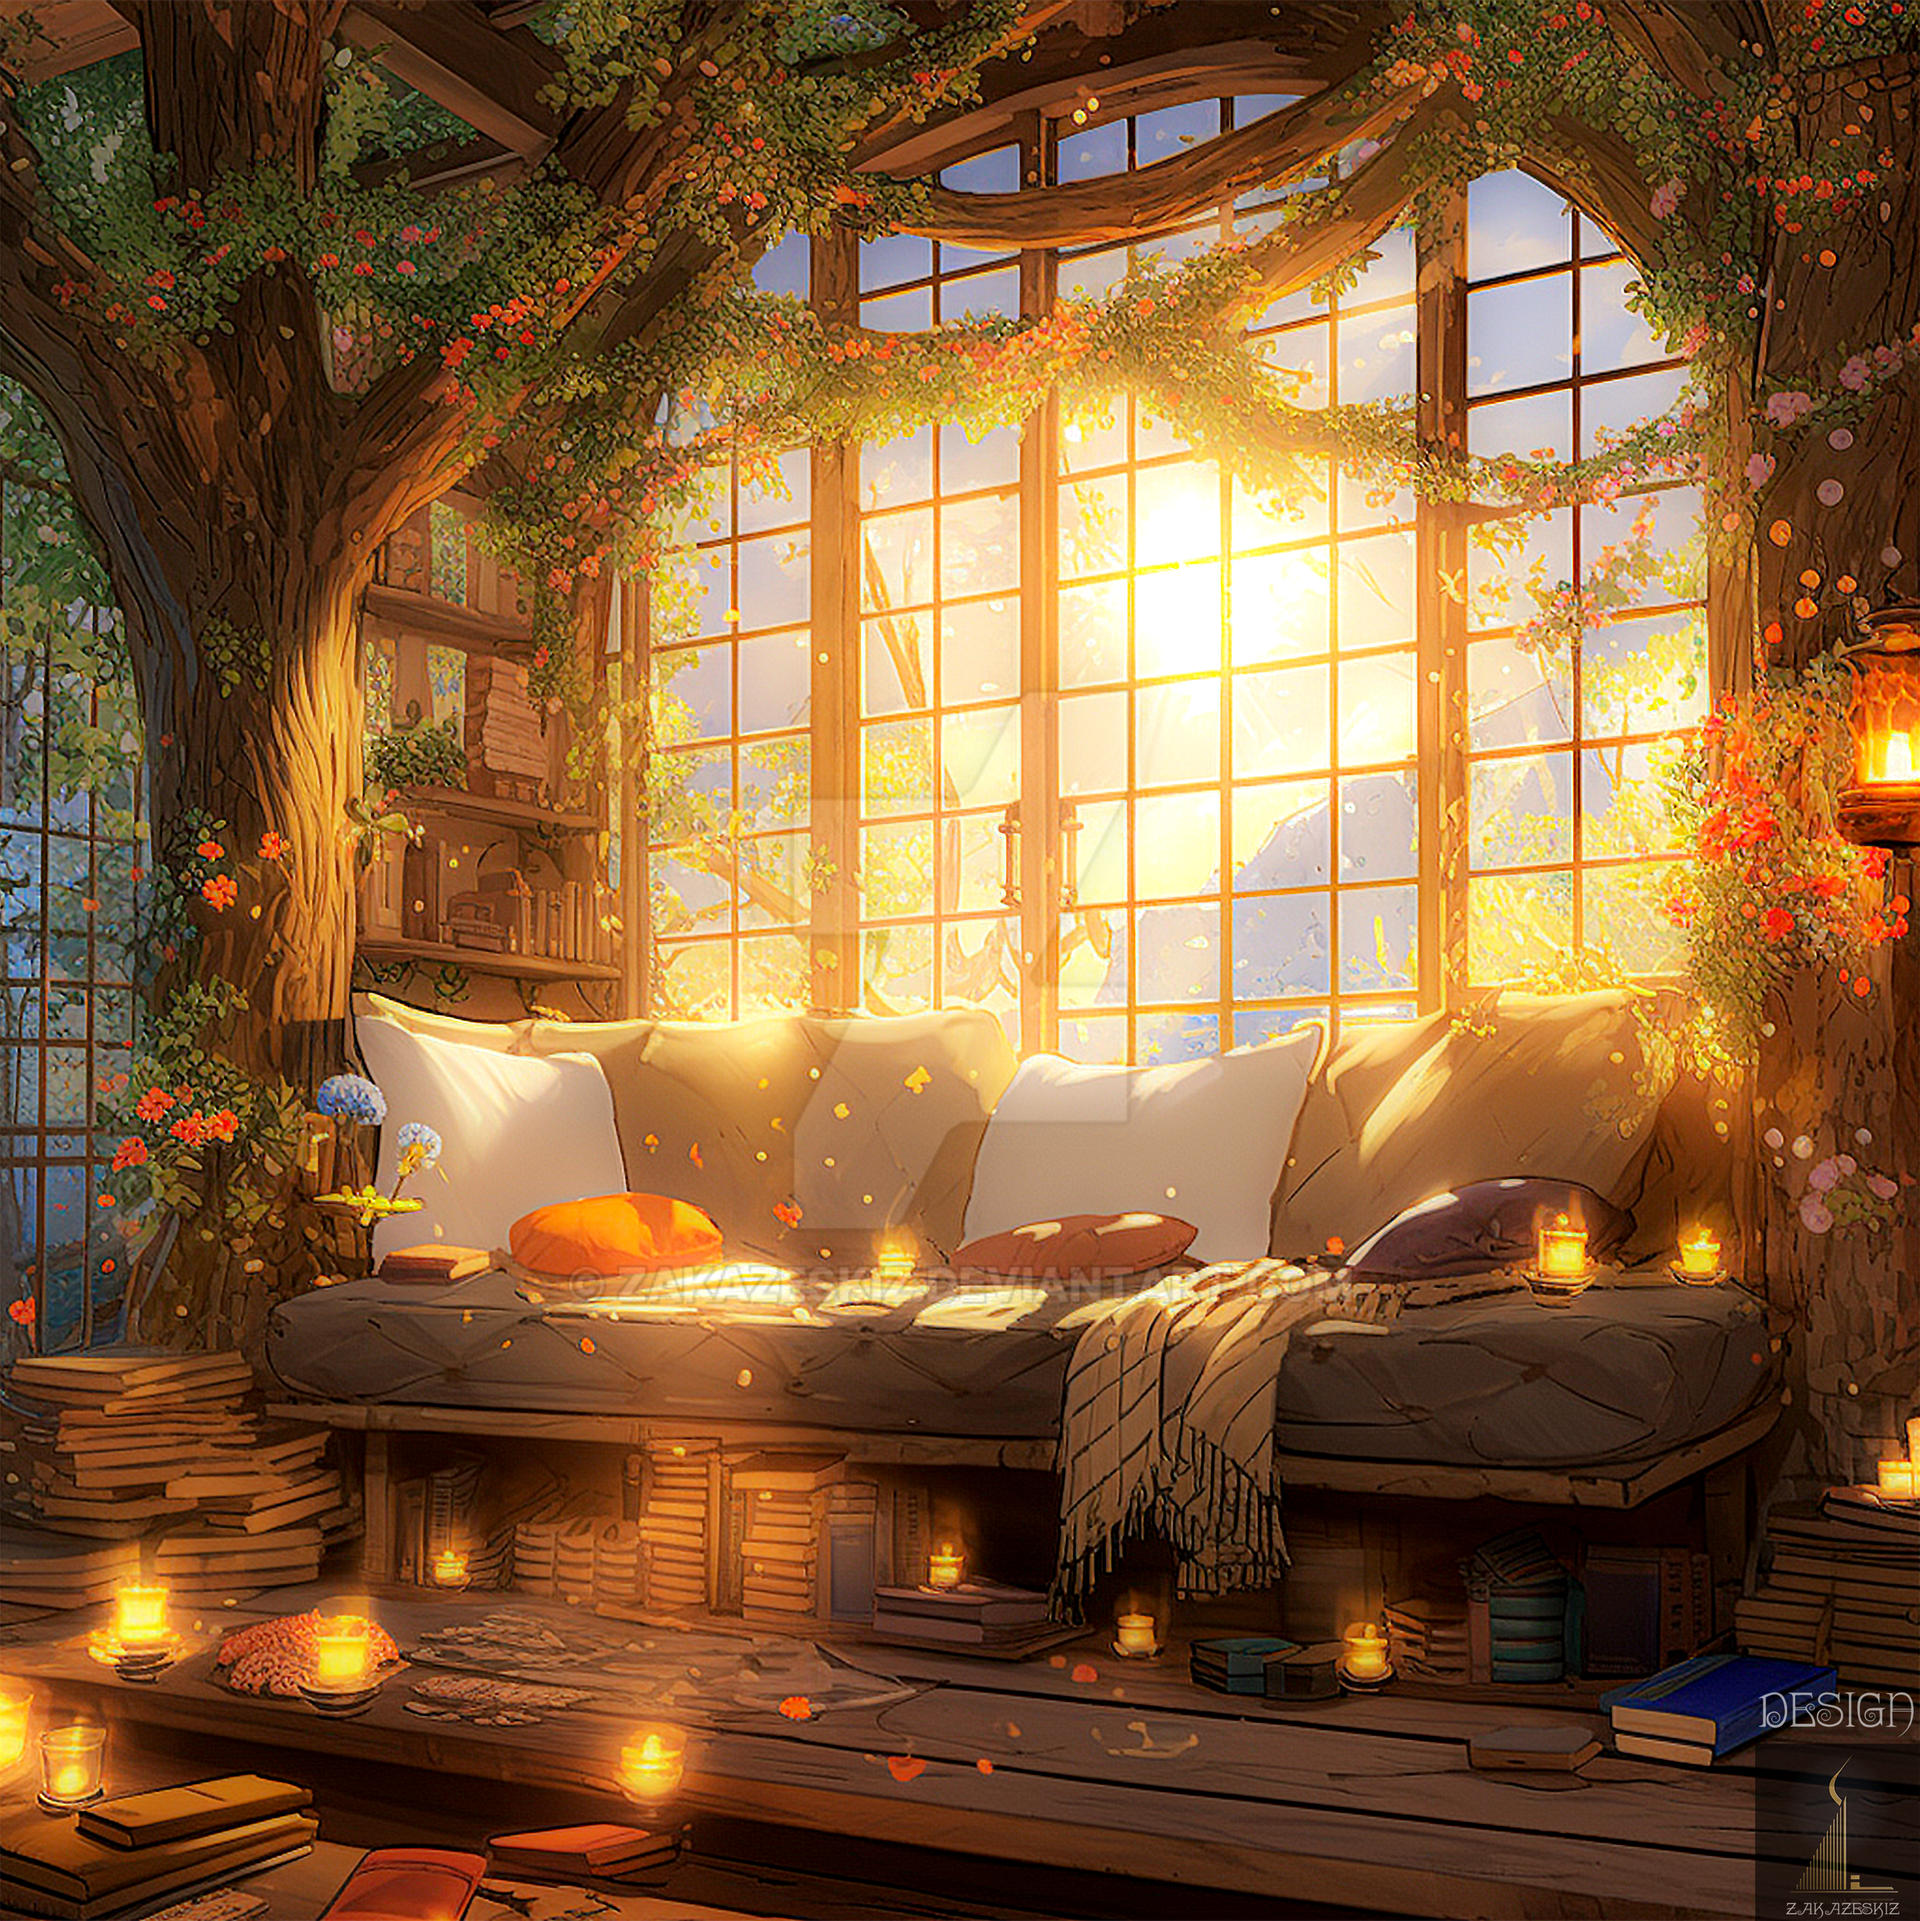 Fairy cozy room interiors3 by zakazeskiz on DeviantArt